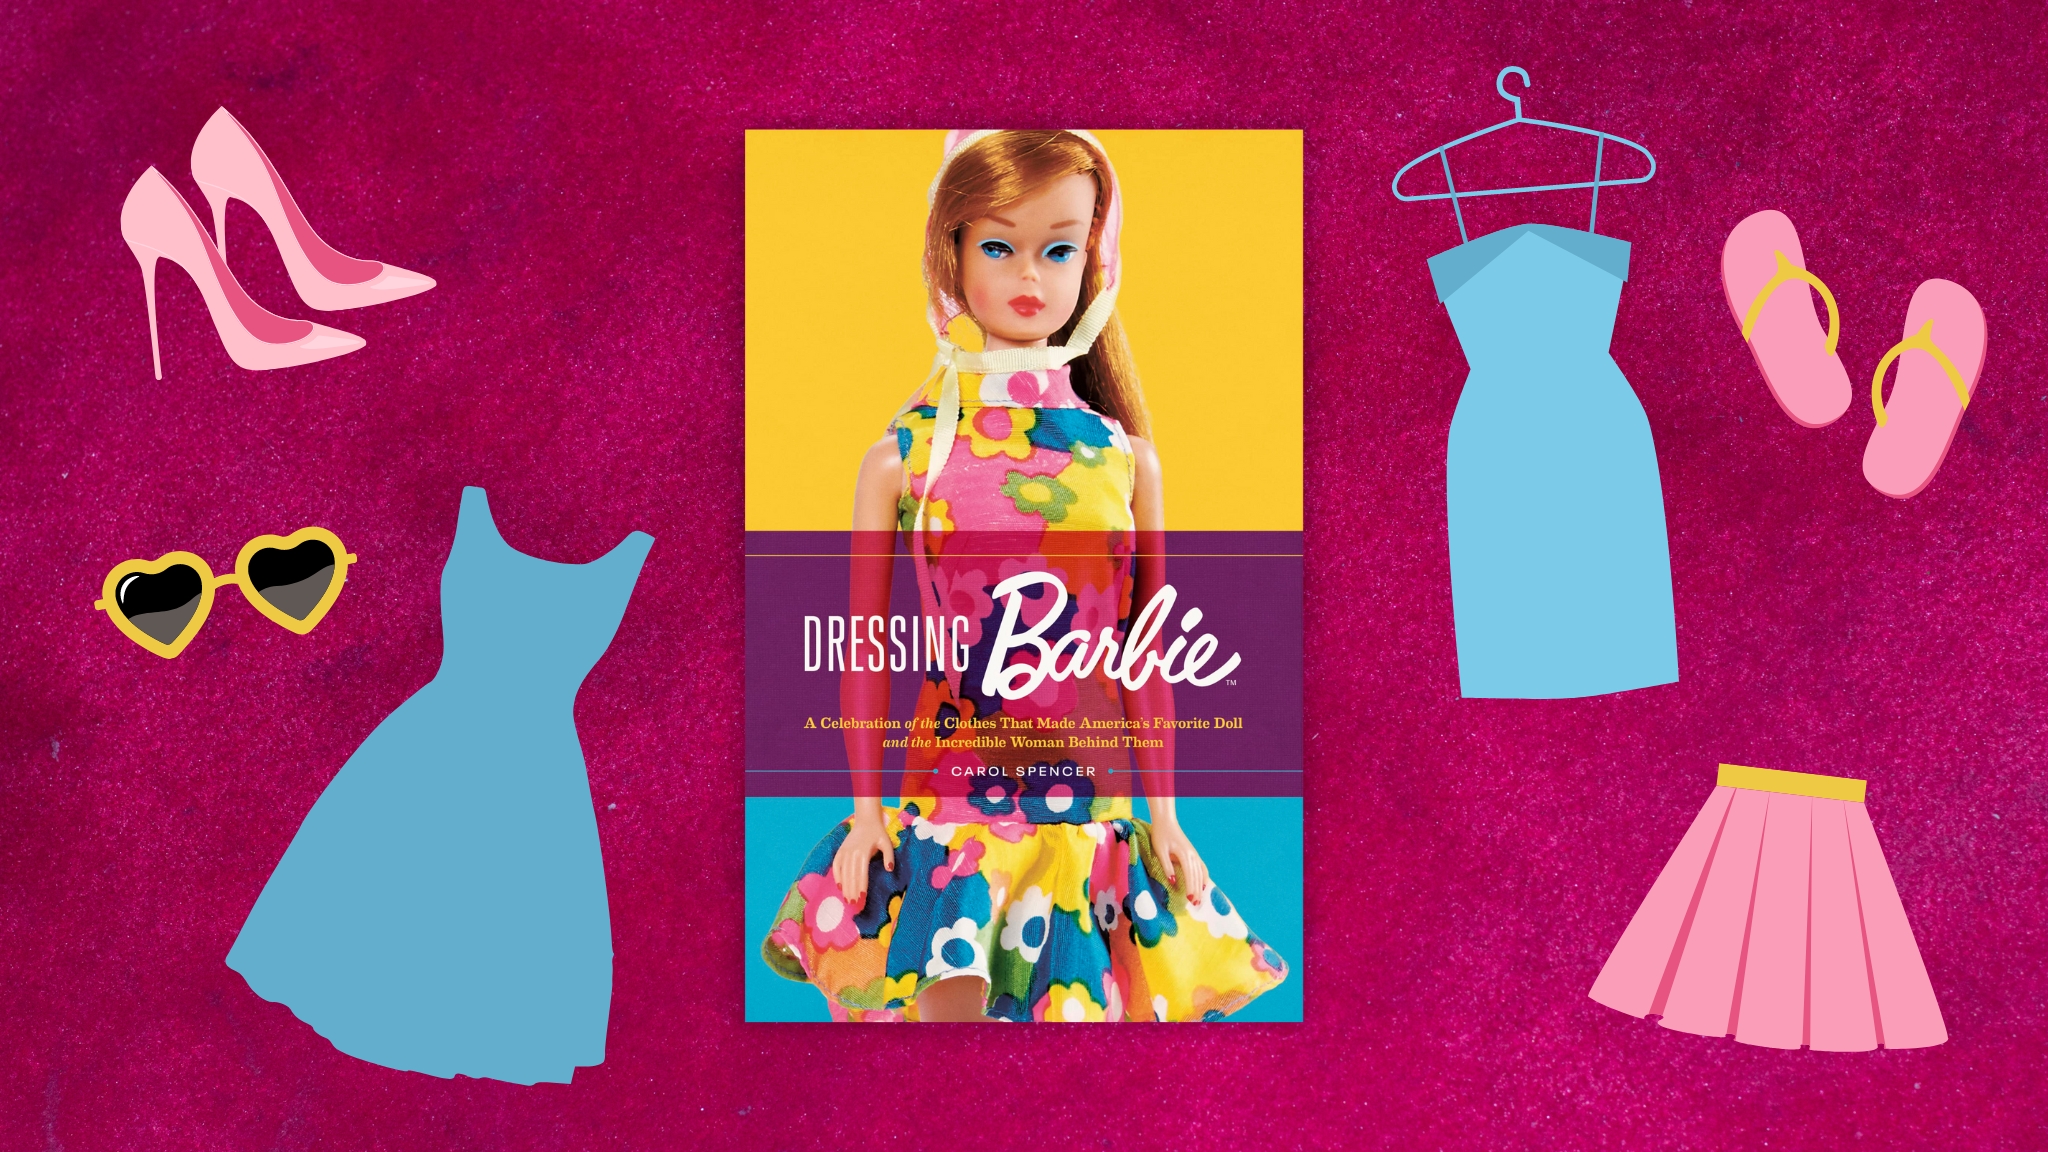 Meet the Fashion Designer Responsible for “Dressing Barbie